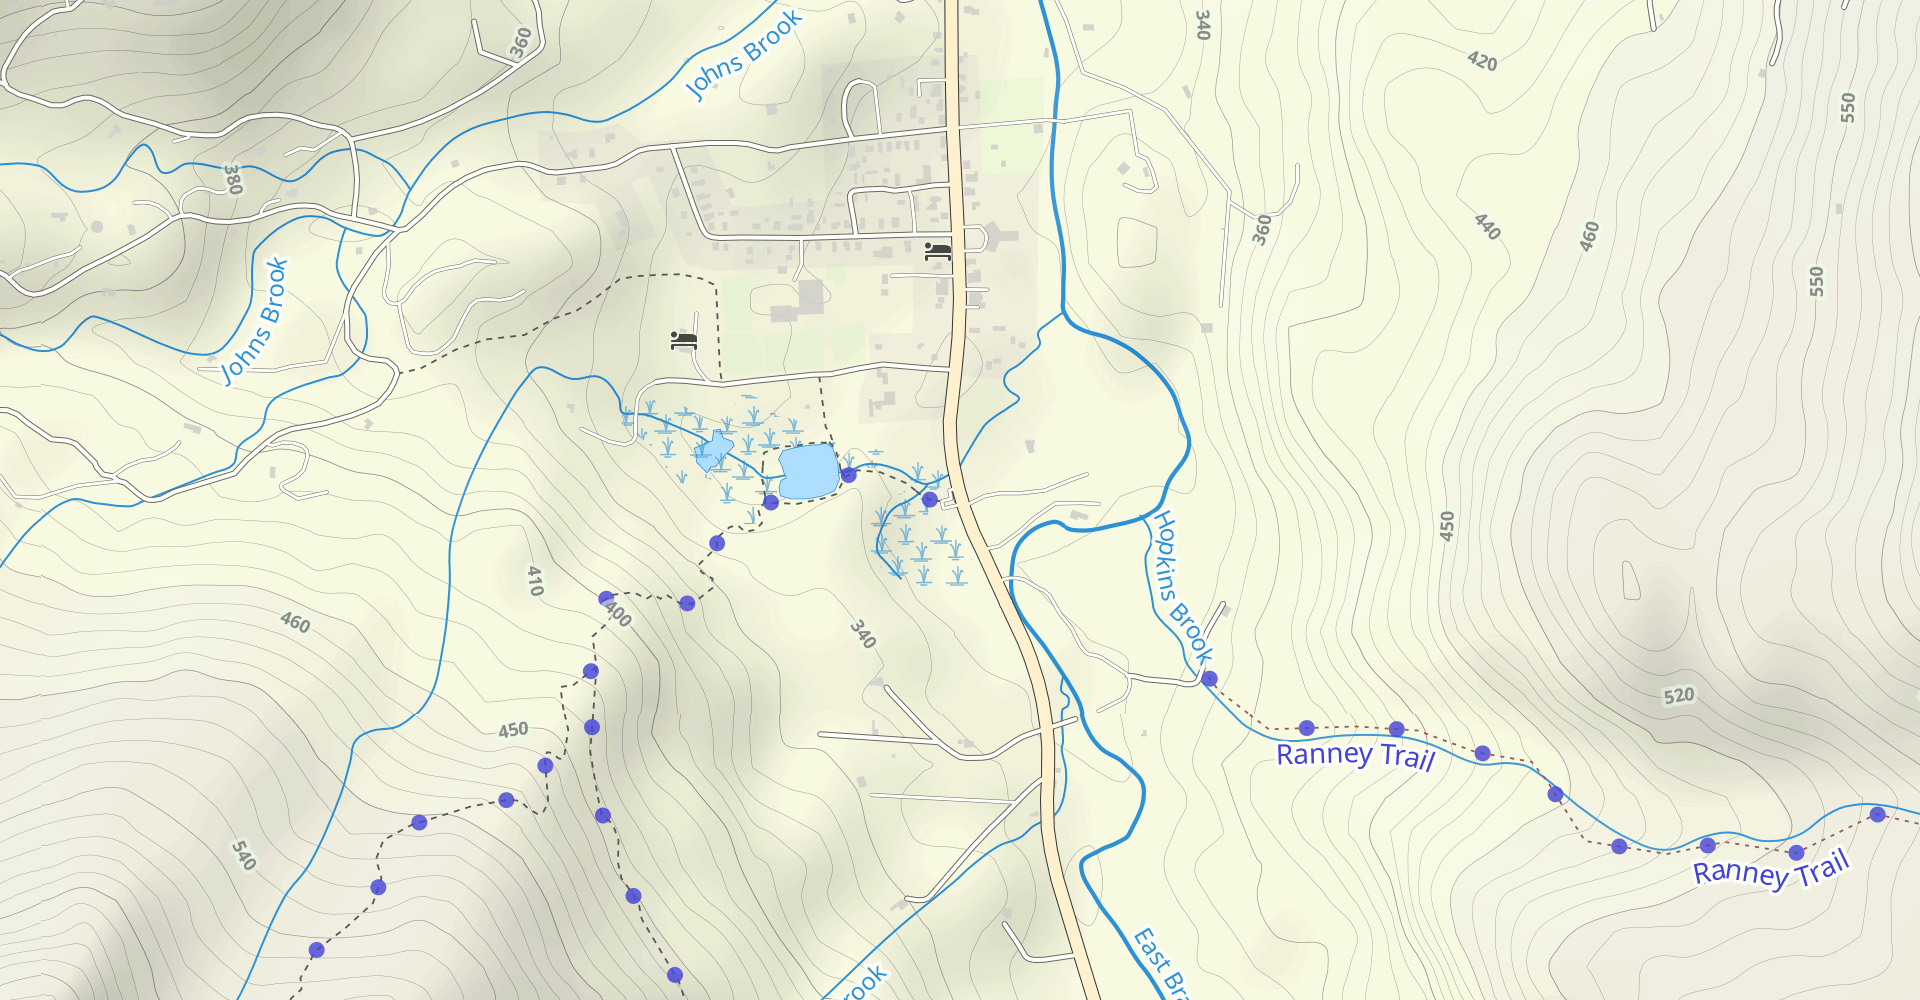 The Wolfjaws via Range Trail and John's Brook Trail